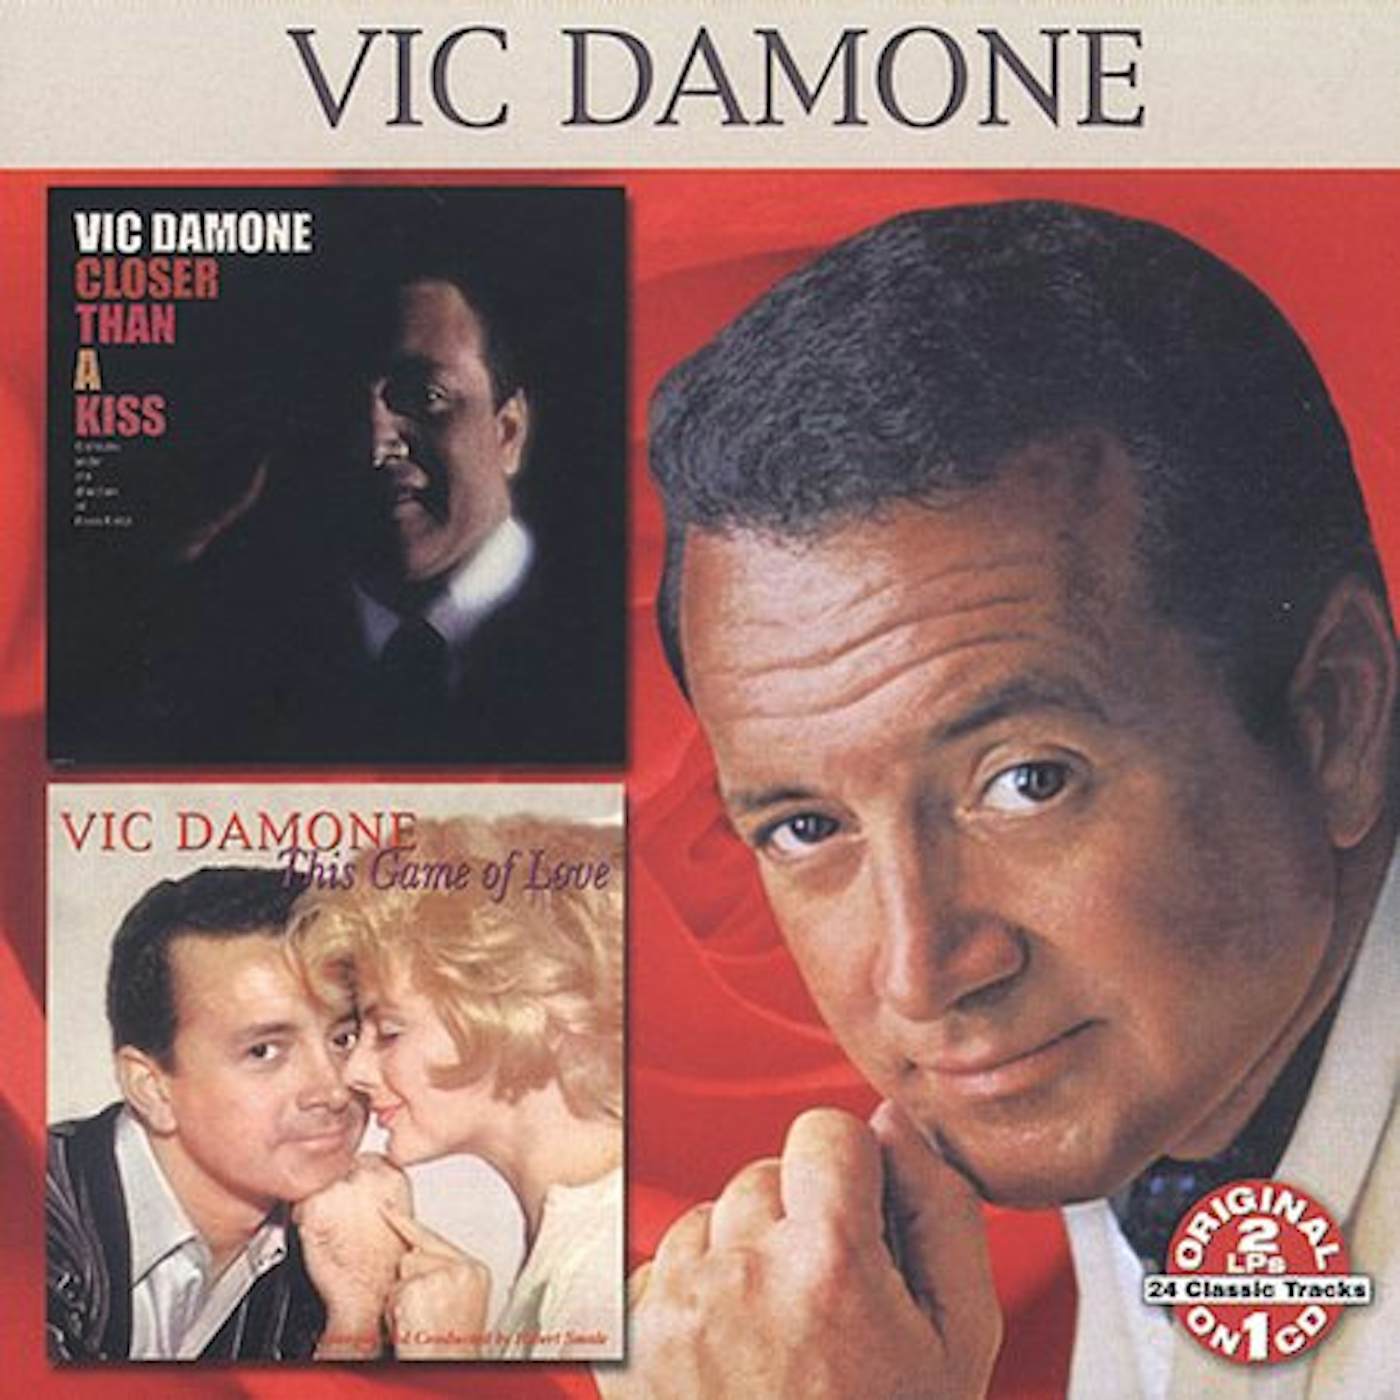 Vic Damone CLOSER THAN A KISS: THIS GAME OF LOVE CD